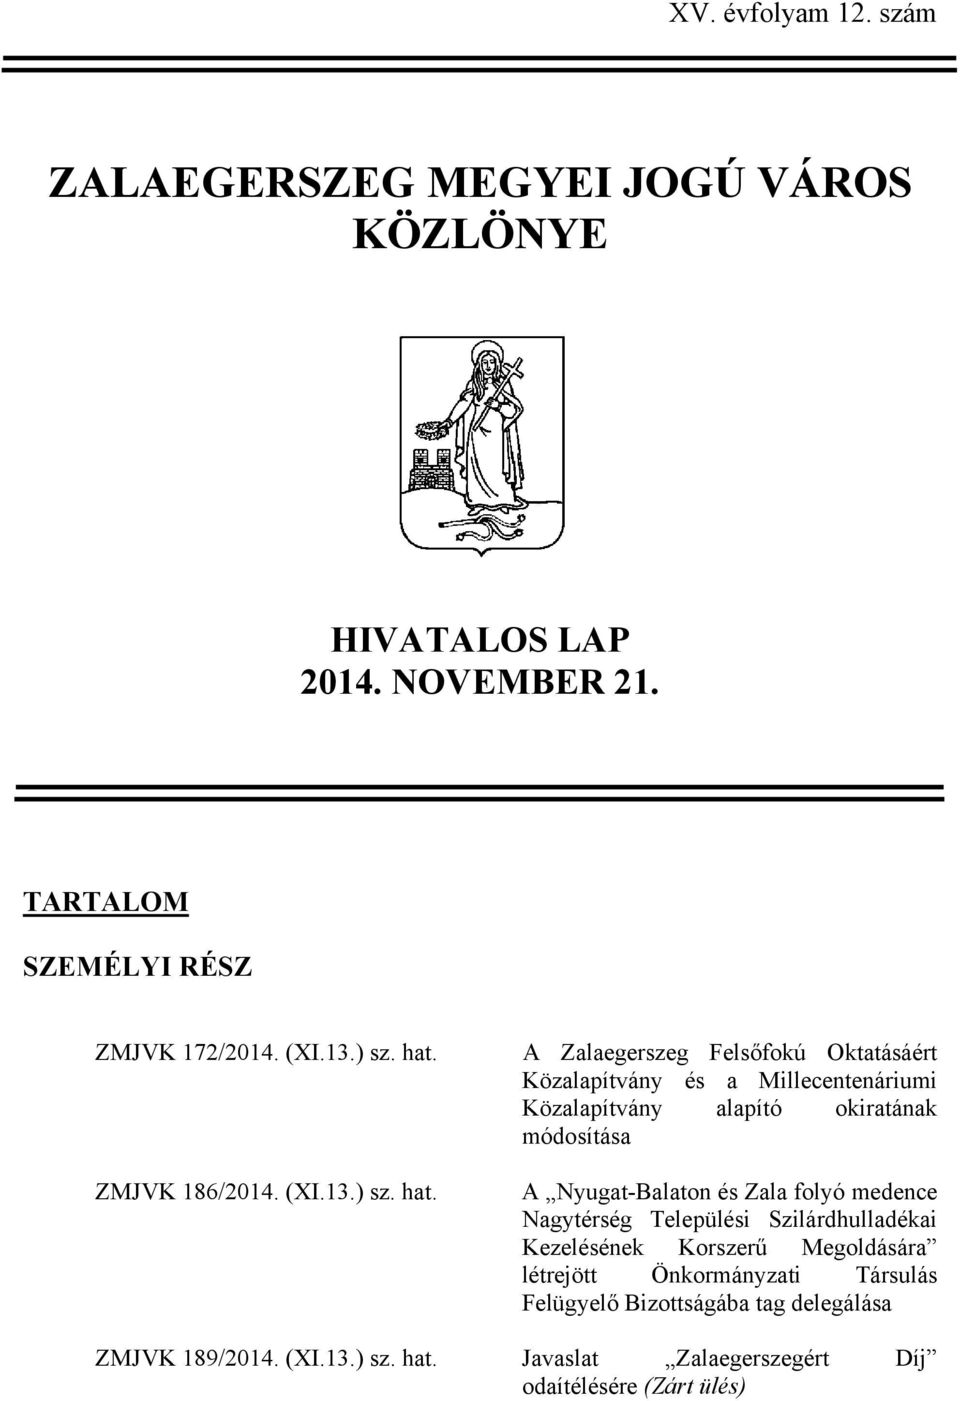 ZMJVK 186/2014. (XI.13.